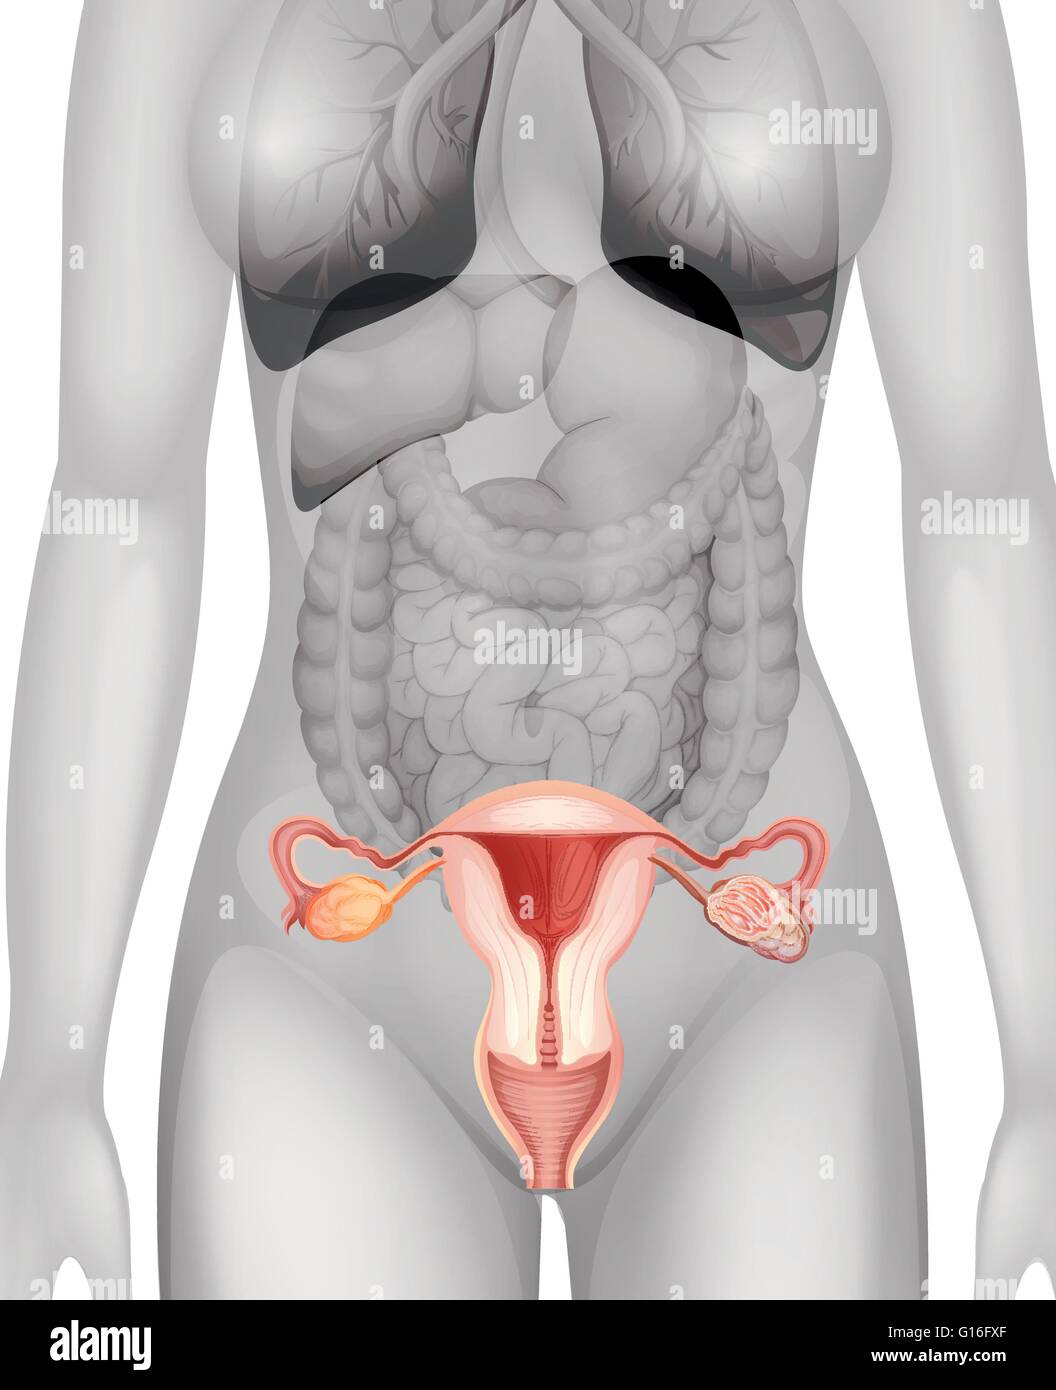 Female genitals in human body illustration Stock Vector